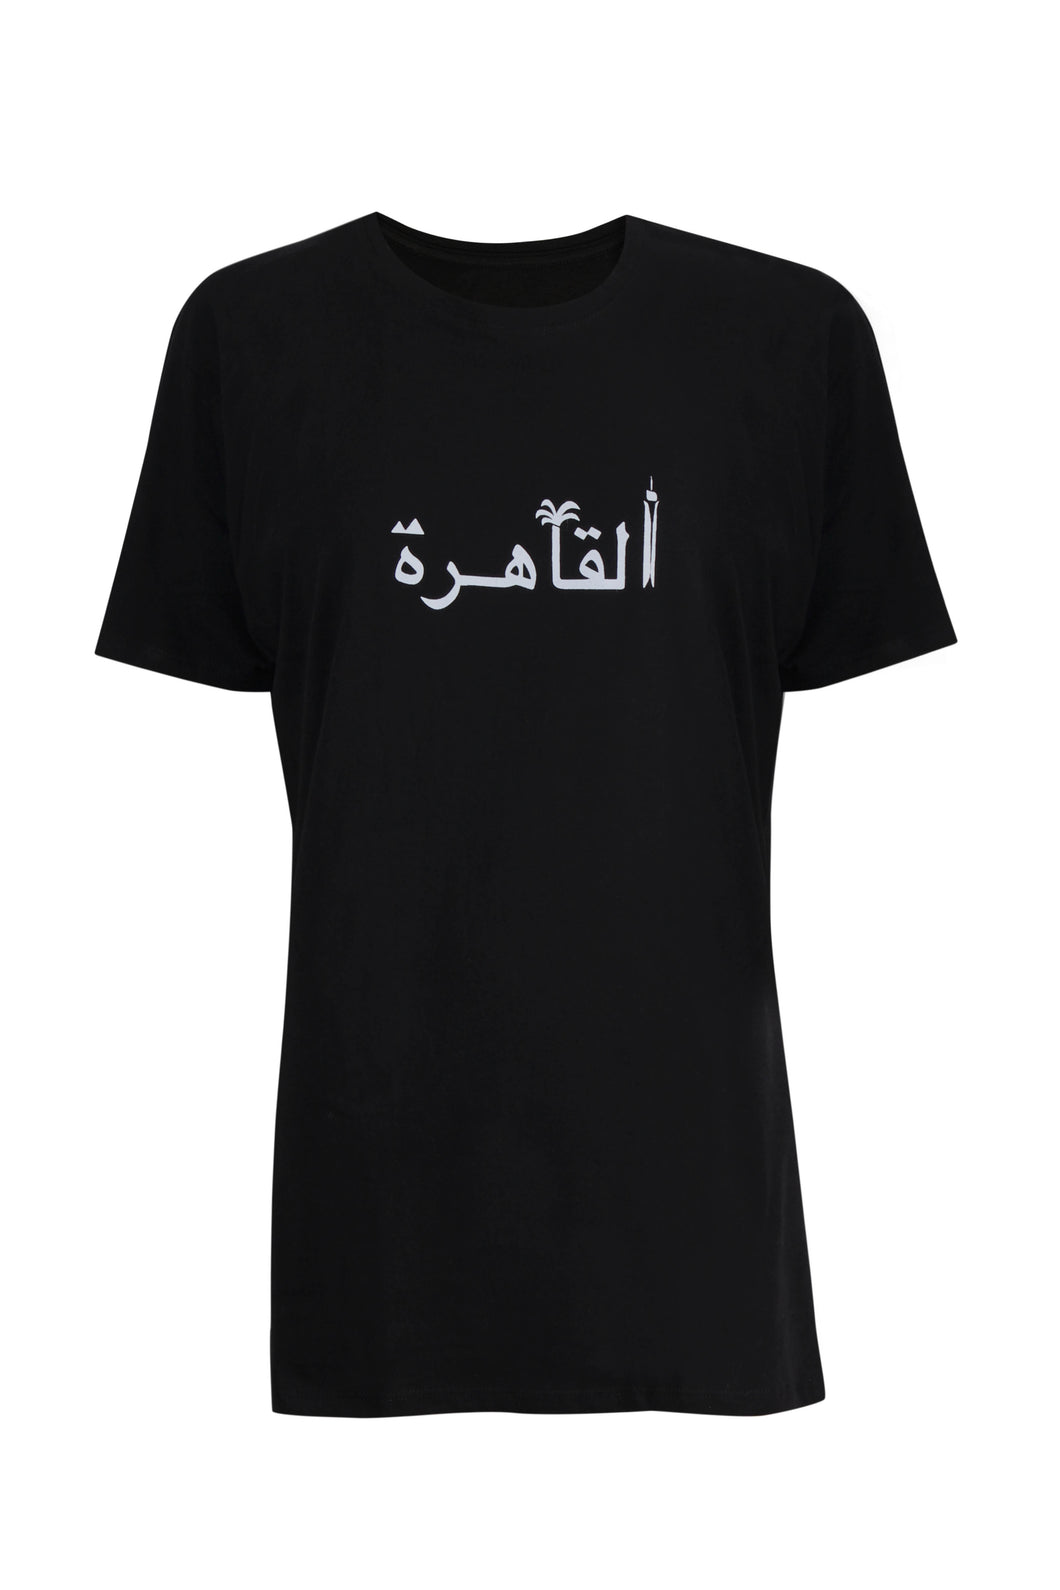 Cairo Unisex Tshirt